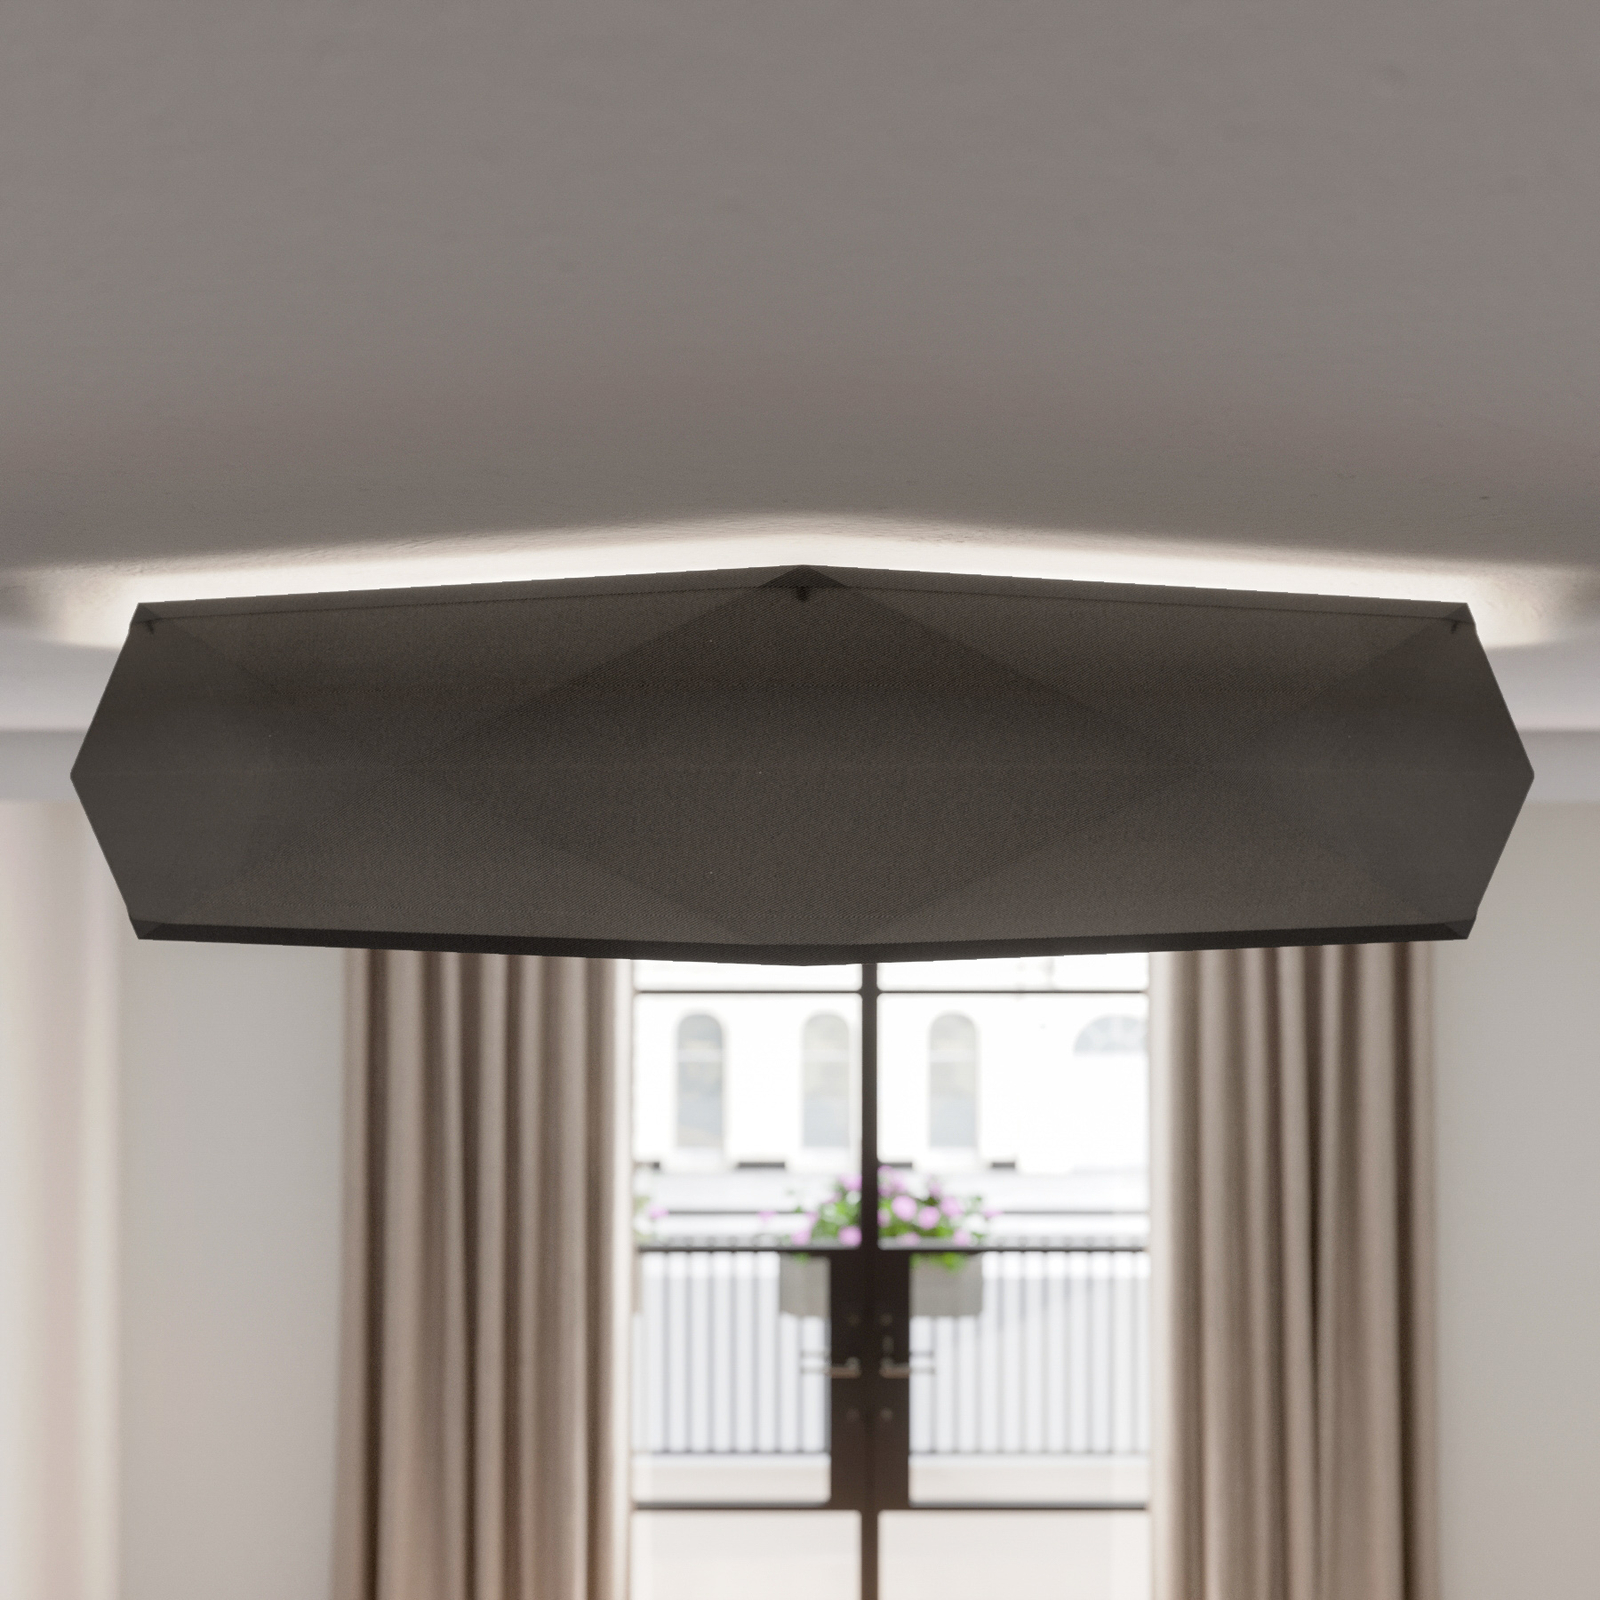 Kantoor New ceiling light, Ø 88 cm, black